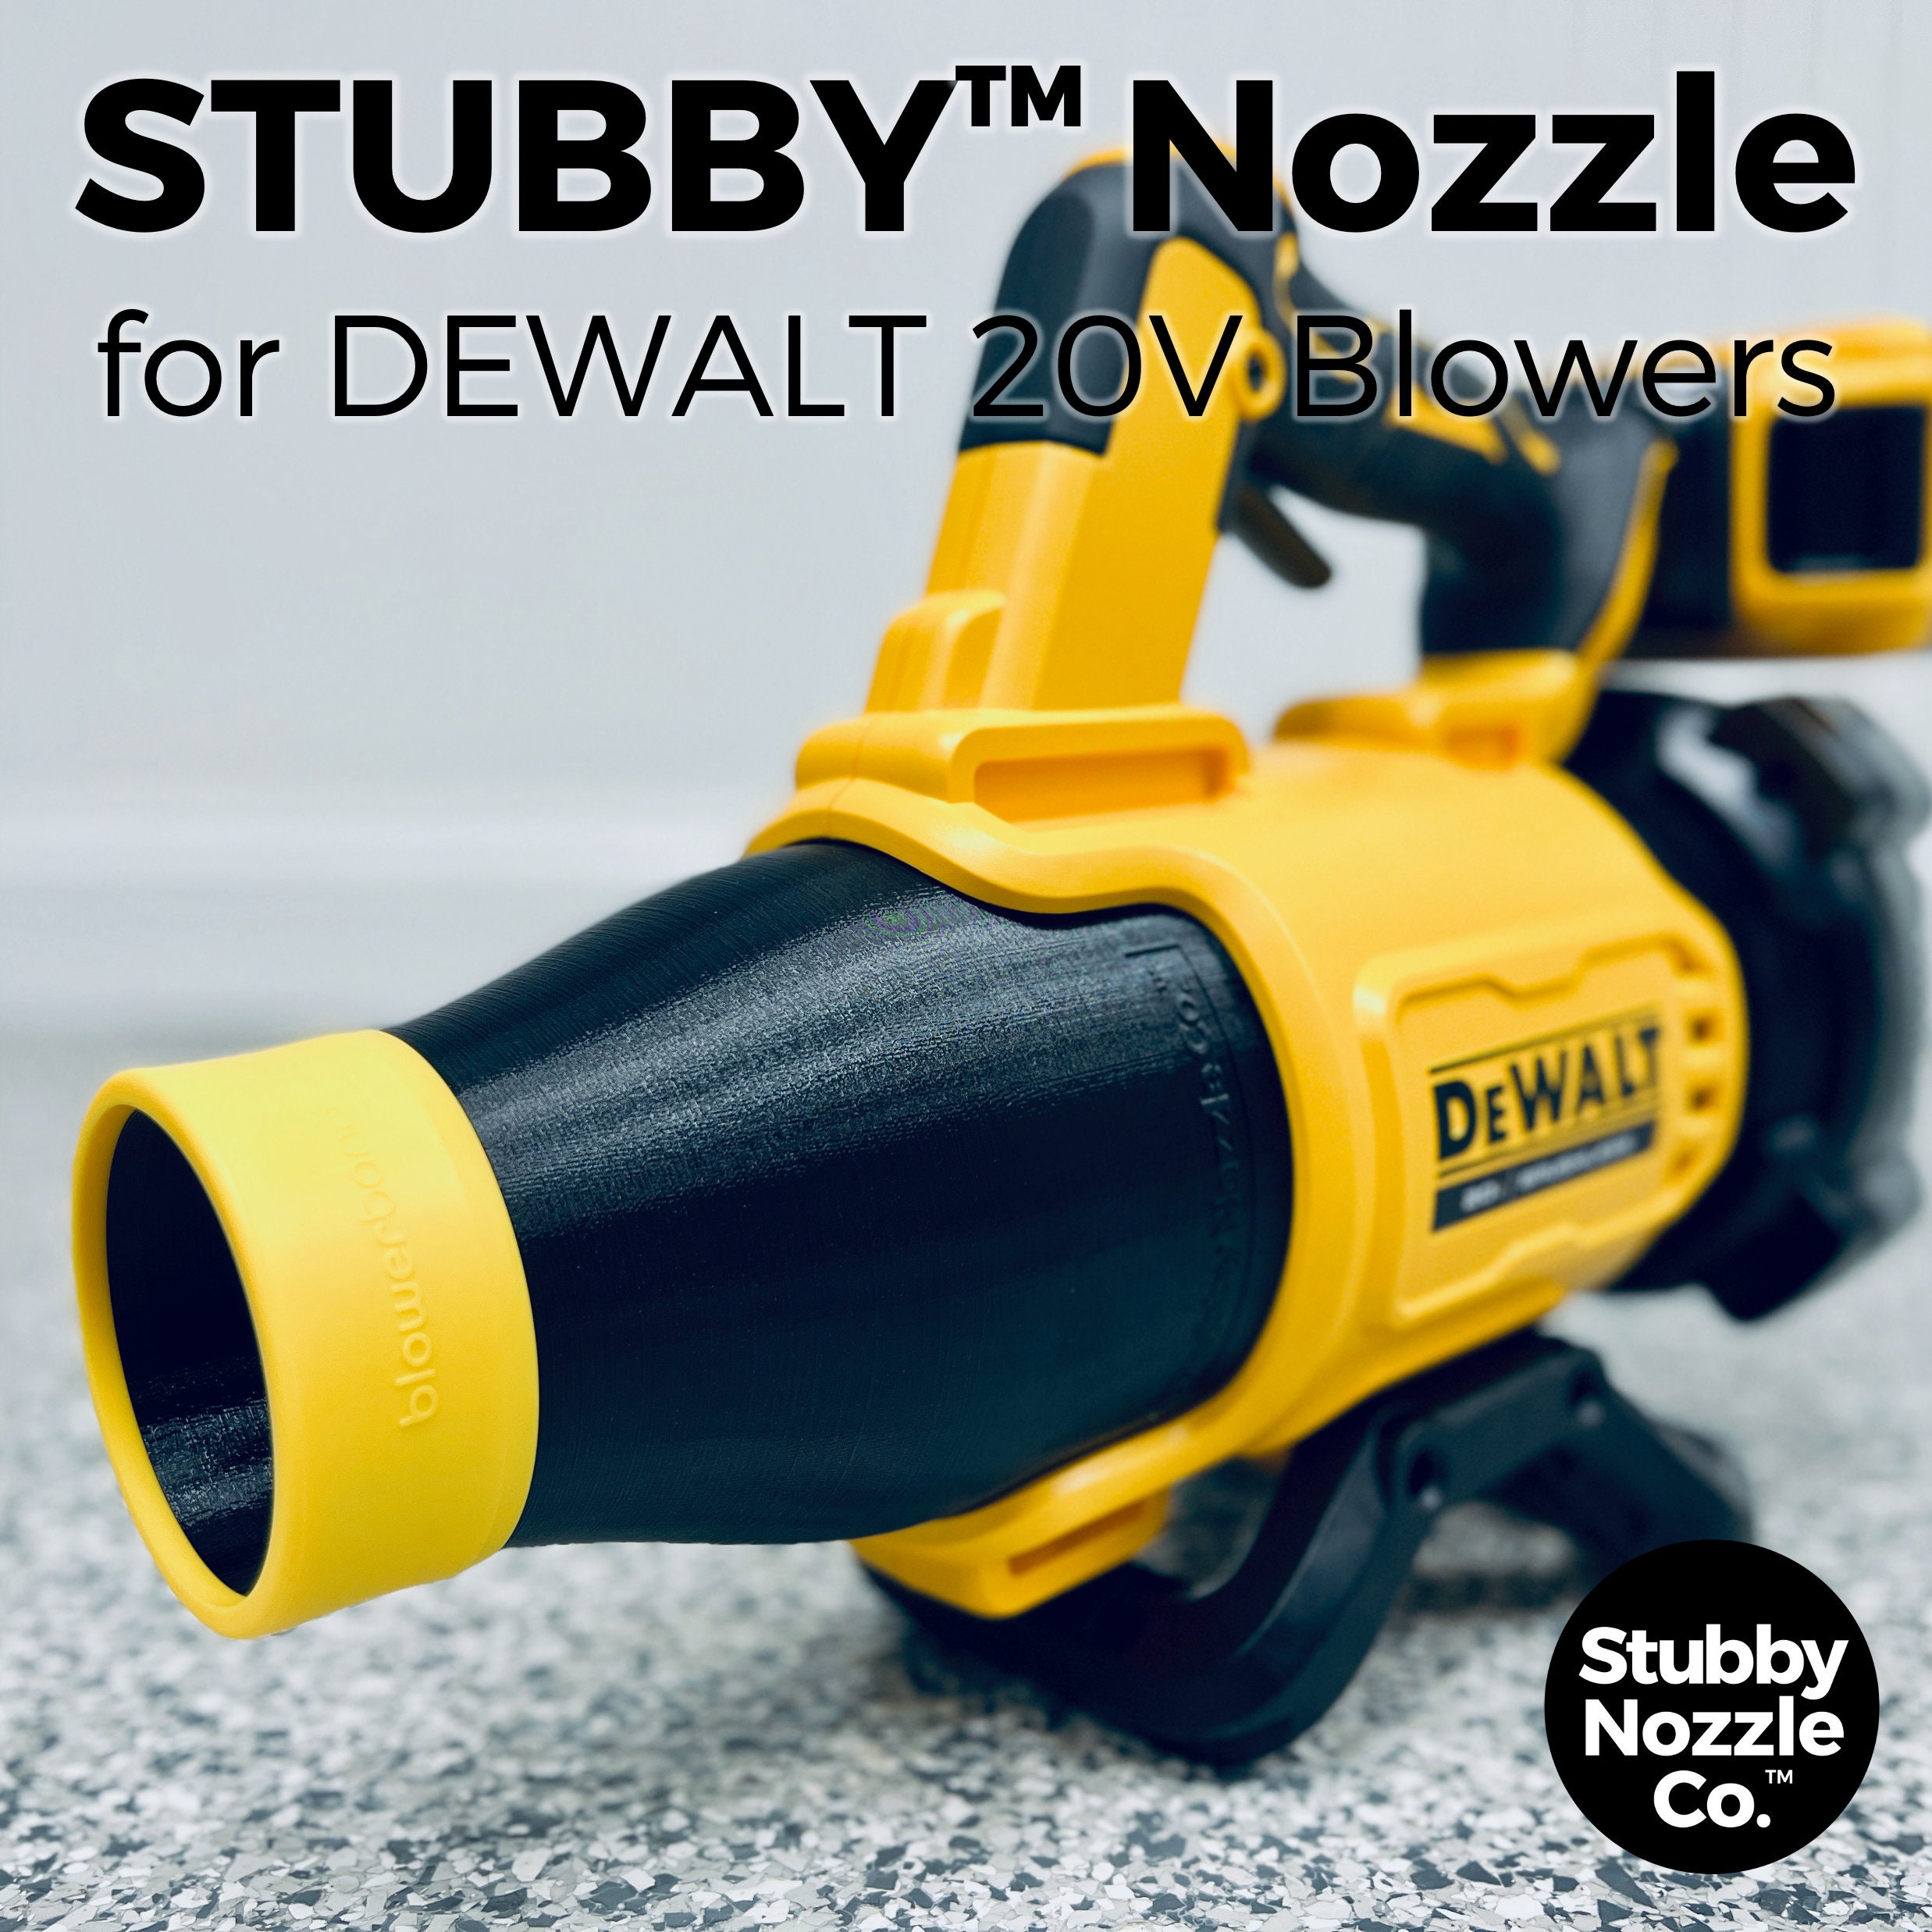 Stubby Nozzle Co. BucketCaddy - Standard - Detailed Image